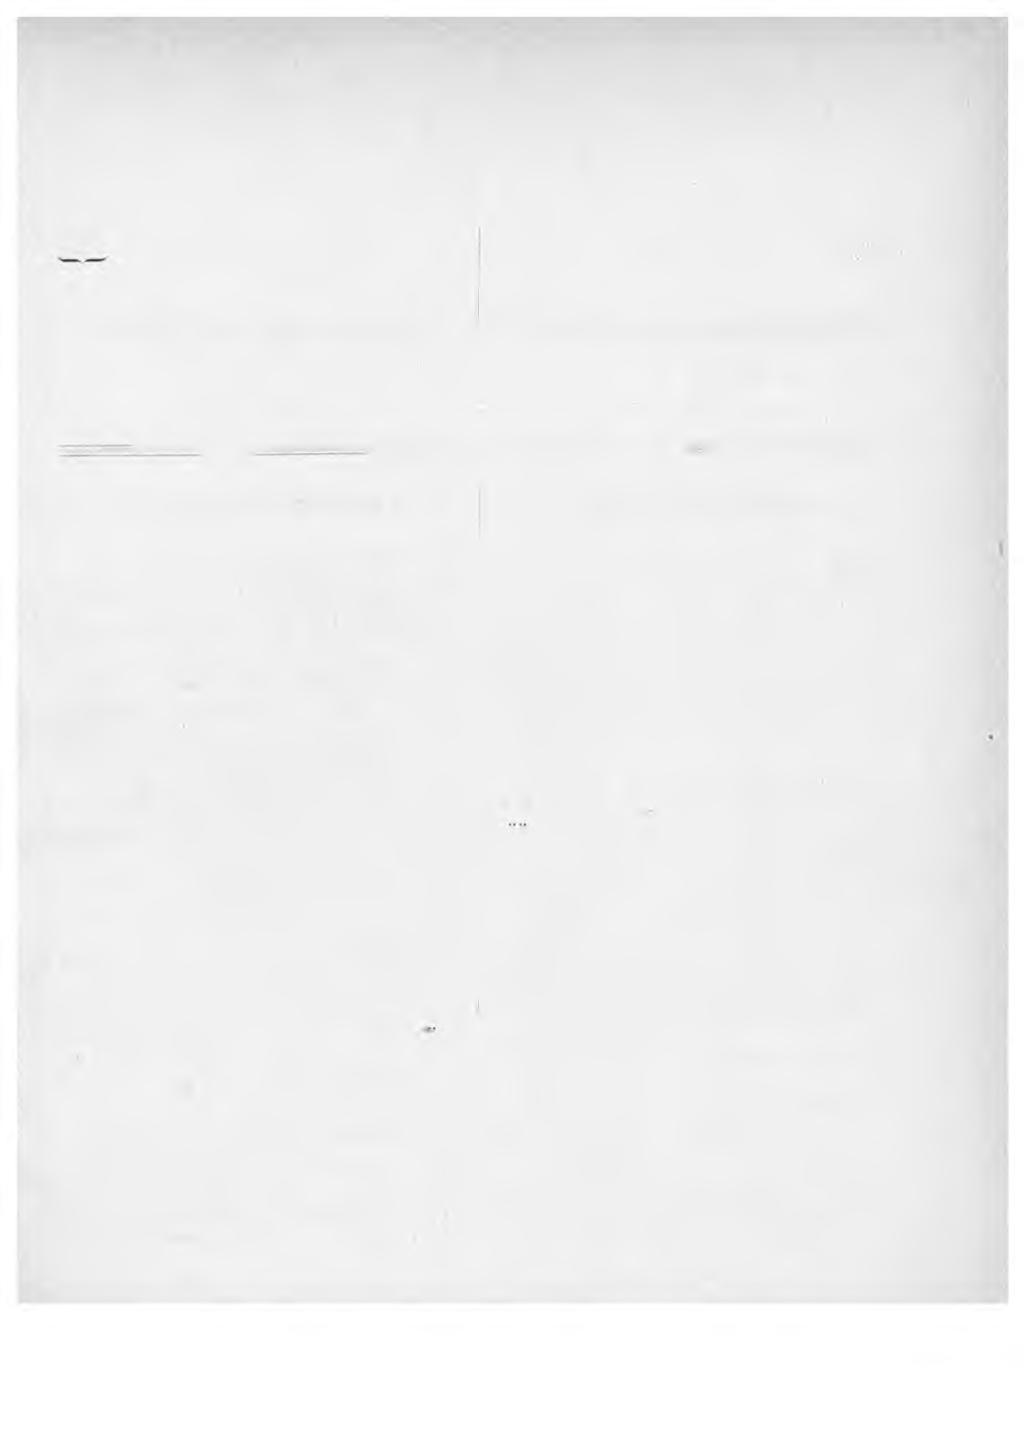 1900 B i h a n g L i i t e N:0 7 tili poststyrelsens i finlanö cirkulär för Suomen postihallituksen kiertokirjeisiin 3"u.li månad. X3.eixiälsvi.vi.lta. Personaltöränclringar.